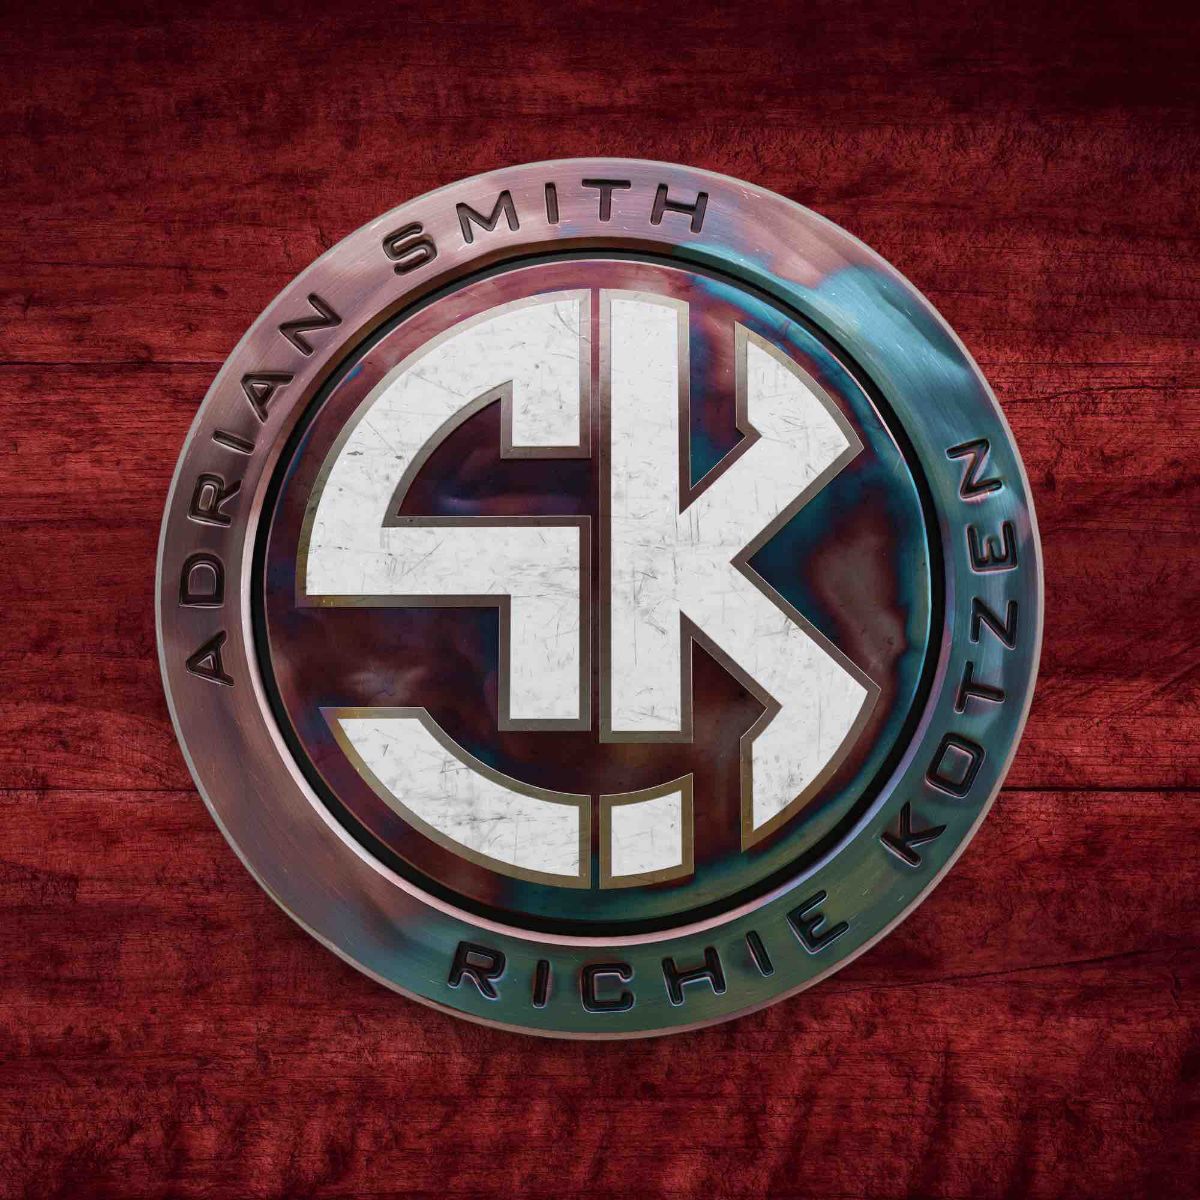 Smith / Kotzen debut album enters UK midweek chart at No.5